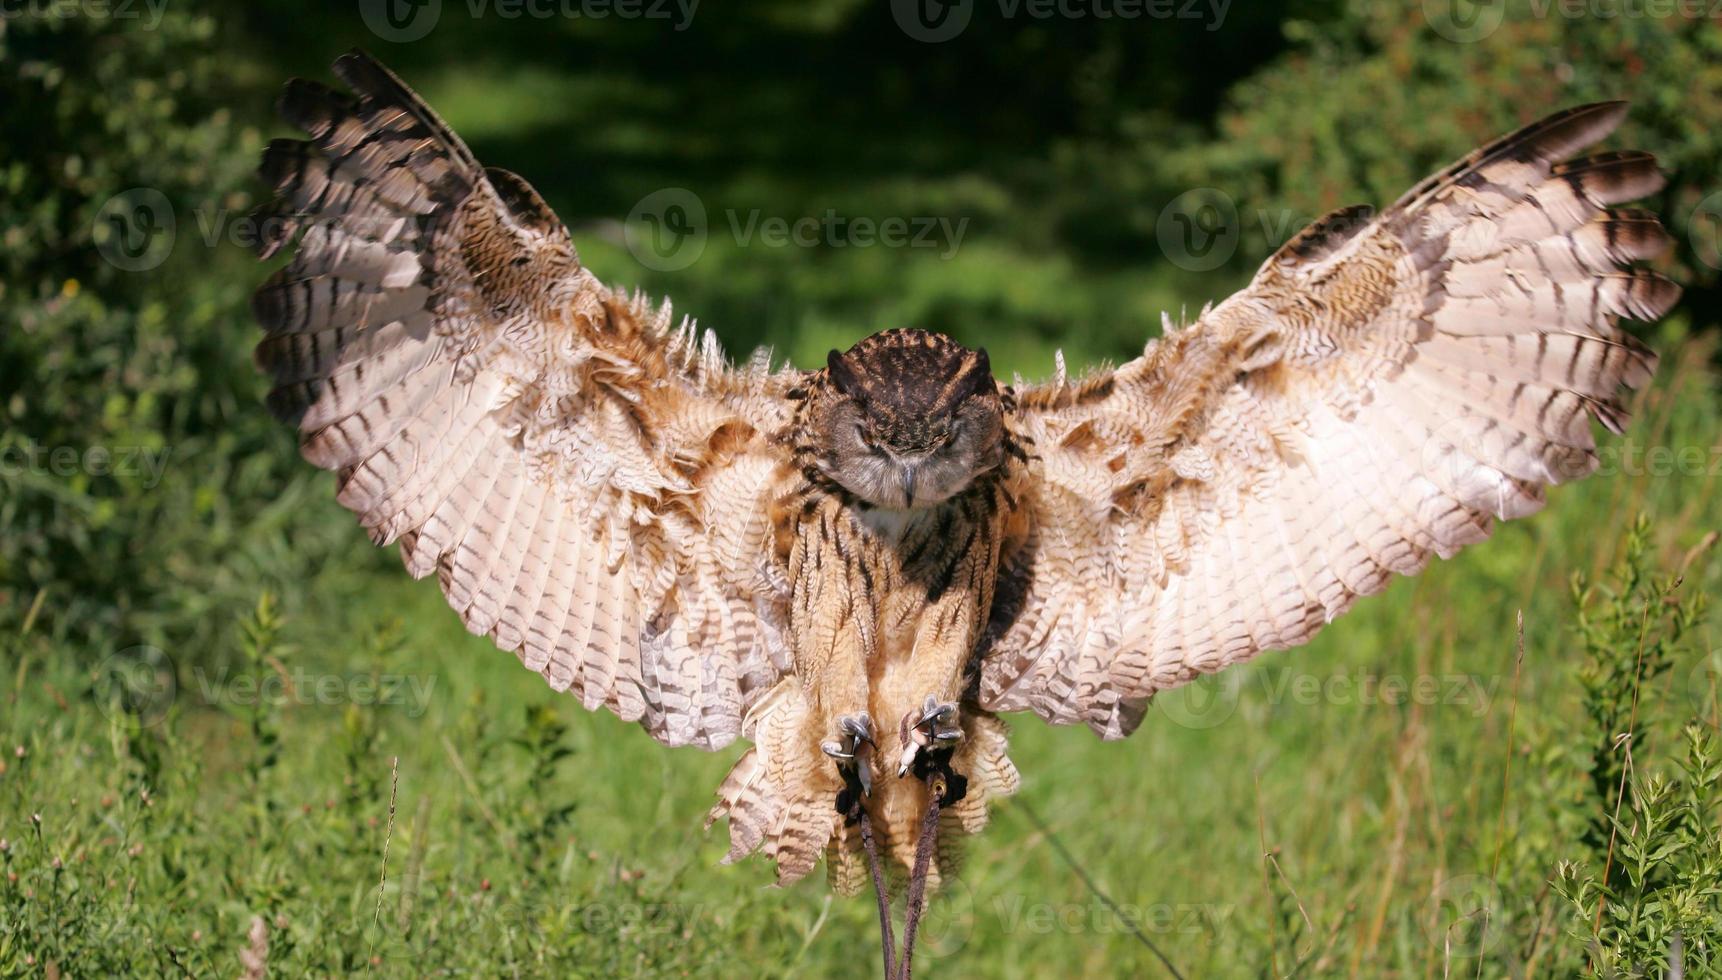 Eurasian Eagle Owl photo